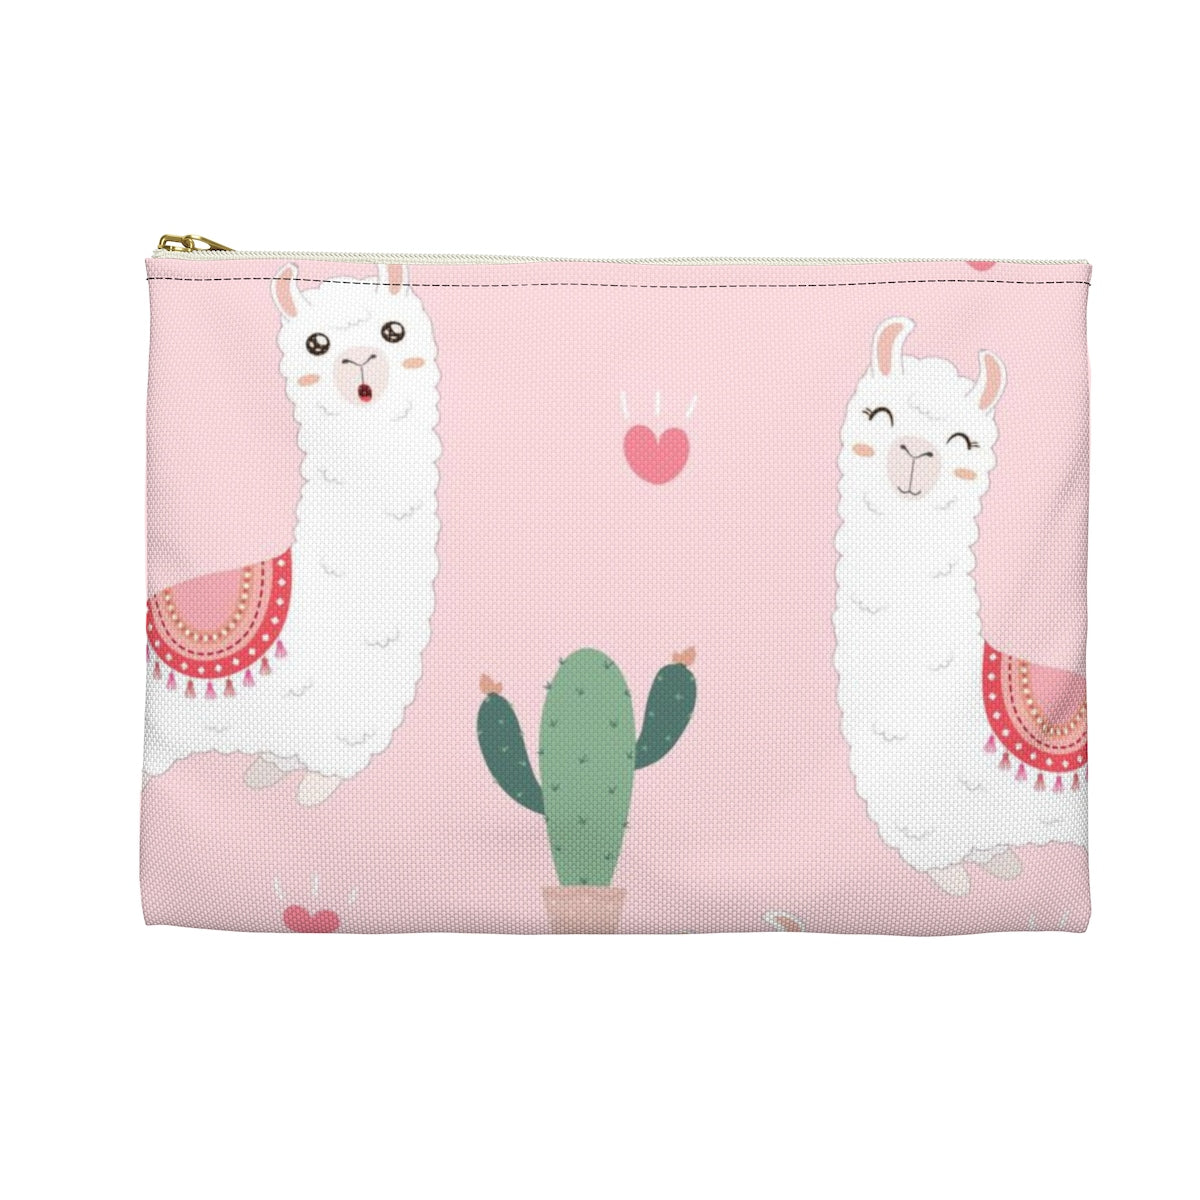 Alpaca Lama Makeup bag, Cactus Zipper Cute Bags, Fun Cosmetic Pouch Organizer, Pink Gifts women, Accessory Travel Purse Pencil Case Starcove Fashion